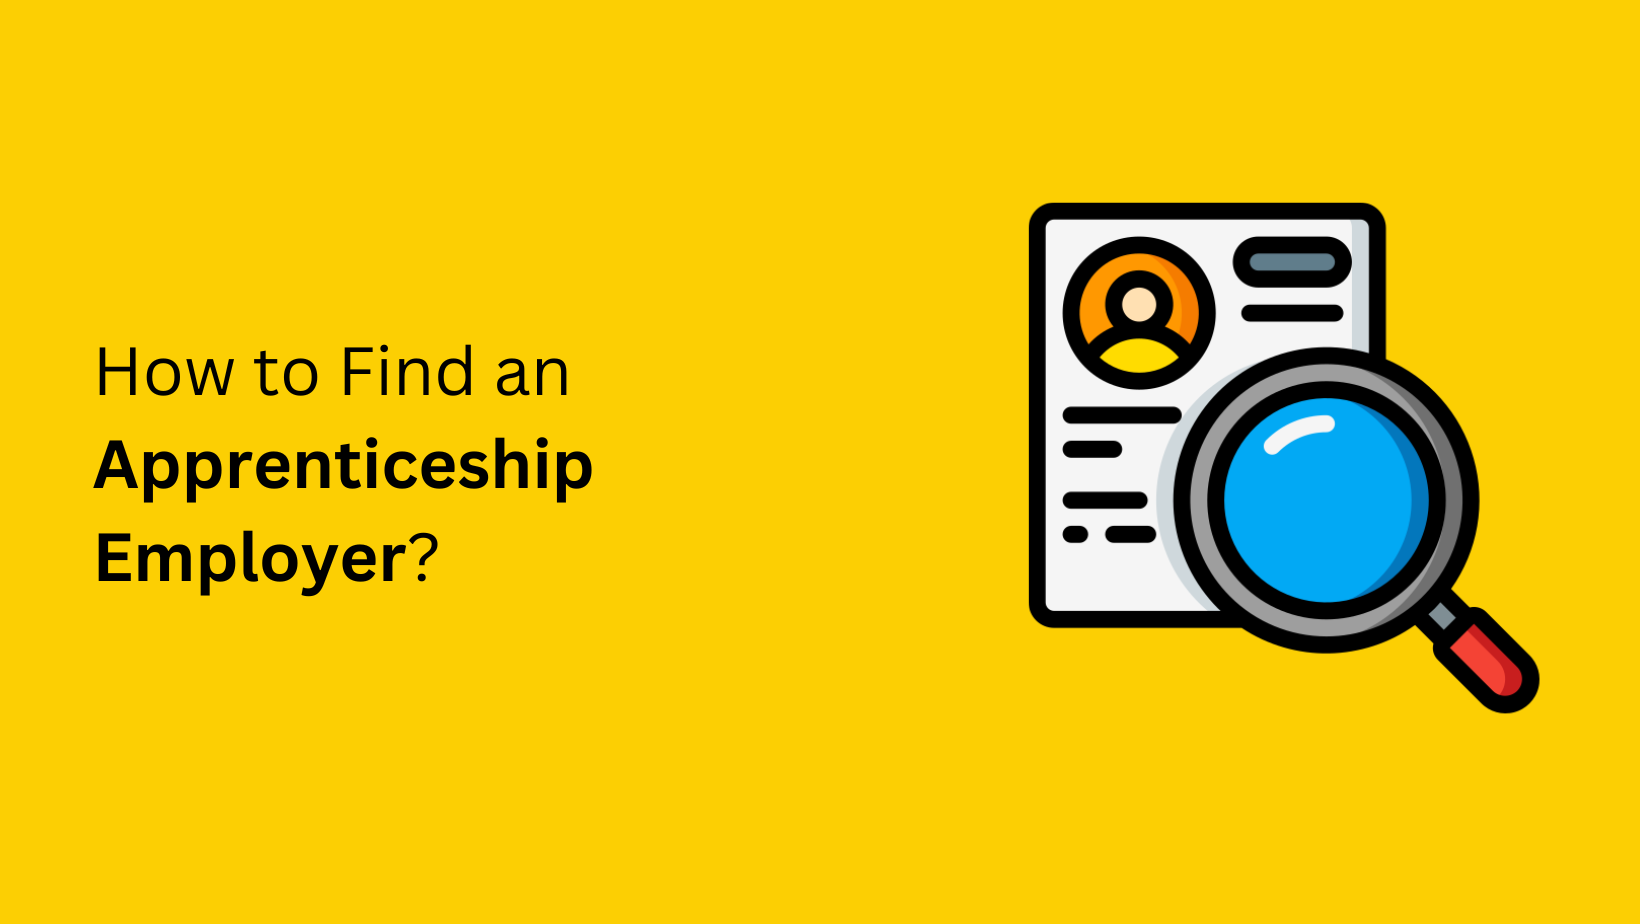 How to Find an Apprenticeship Employer